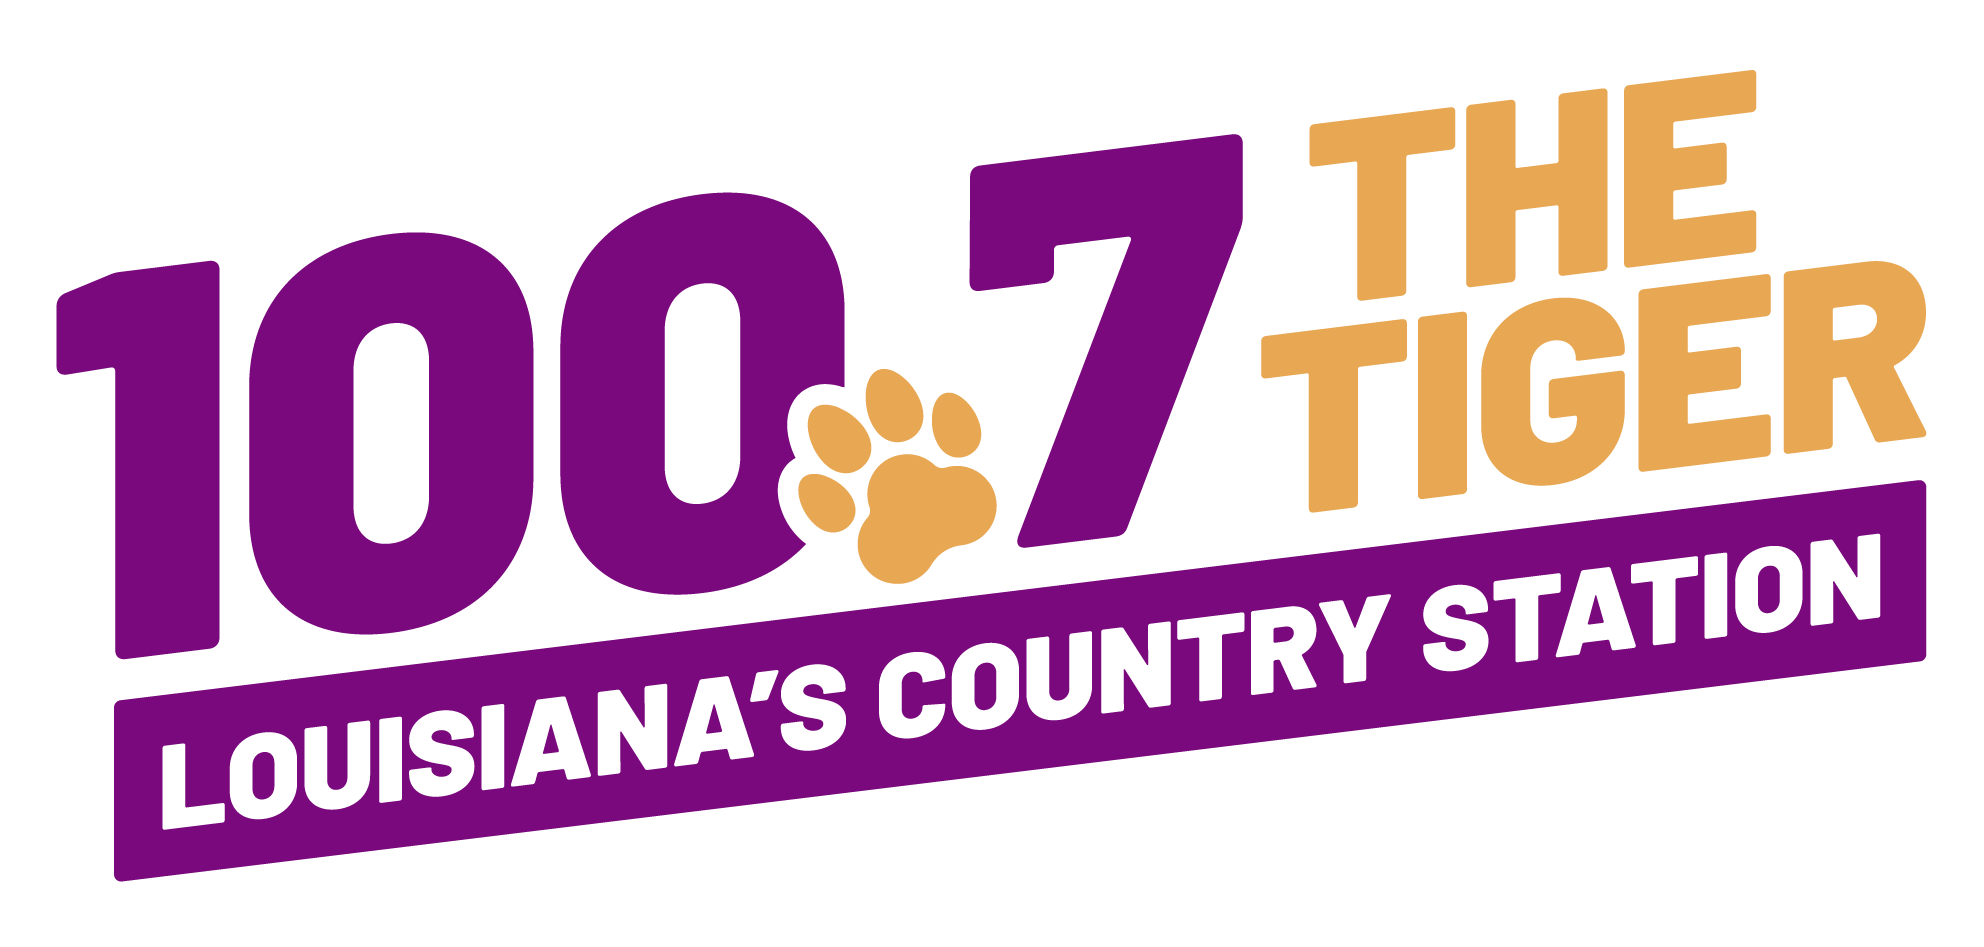 100.7 The Tiger. Louisiana's COuntry Station logo